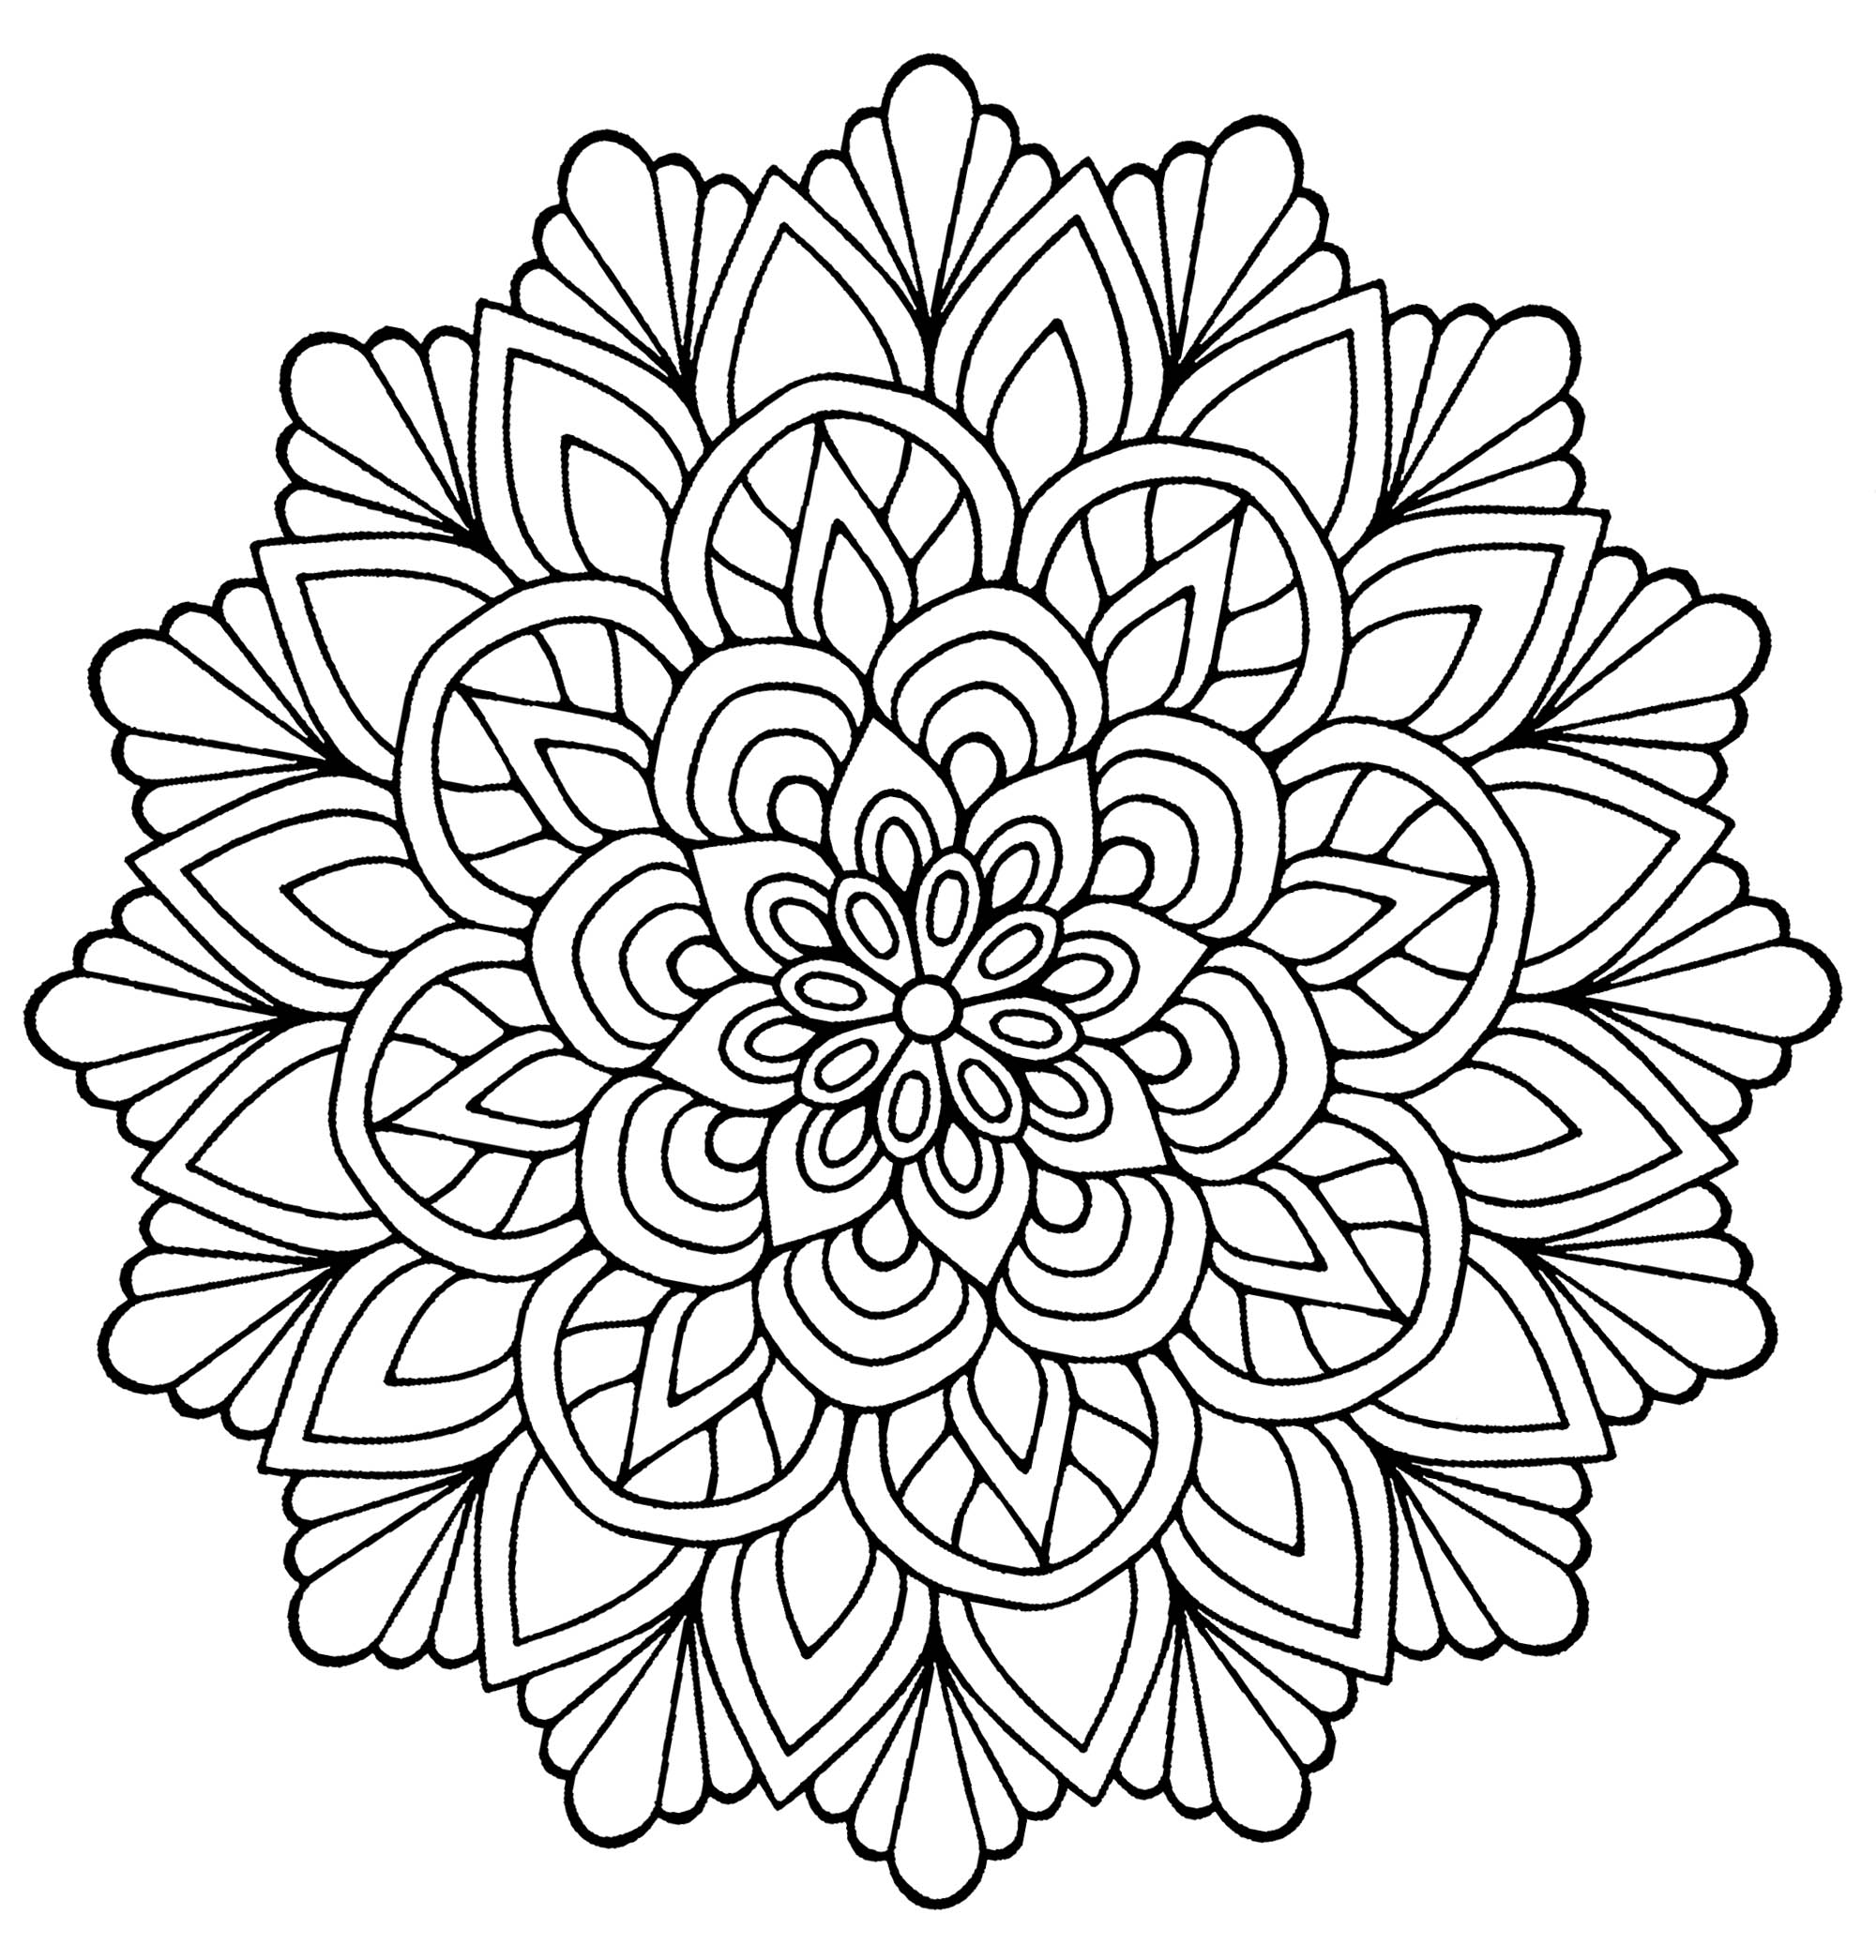 Mandala-flower-with-leaves - Mandalas Kids Coloring Pages